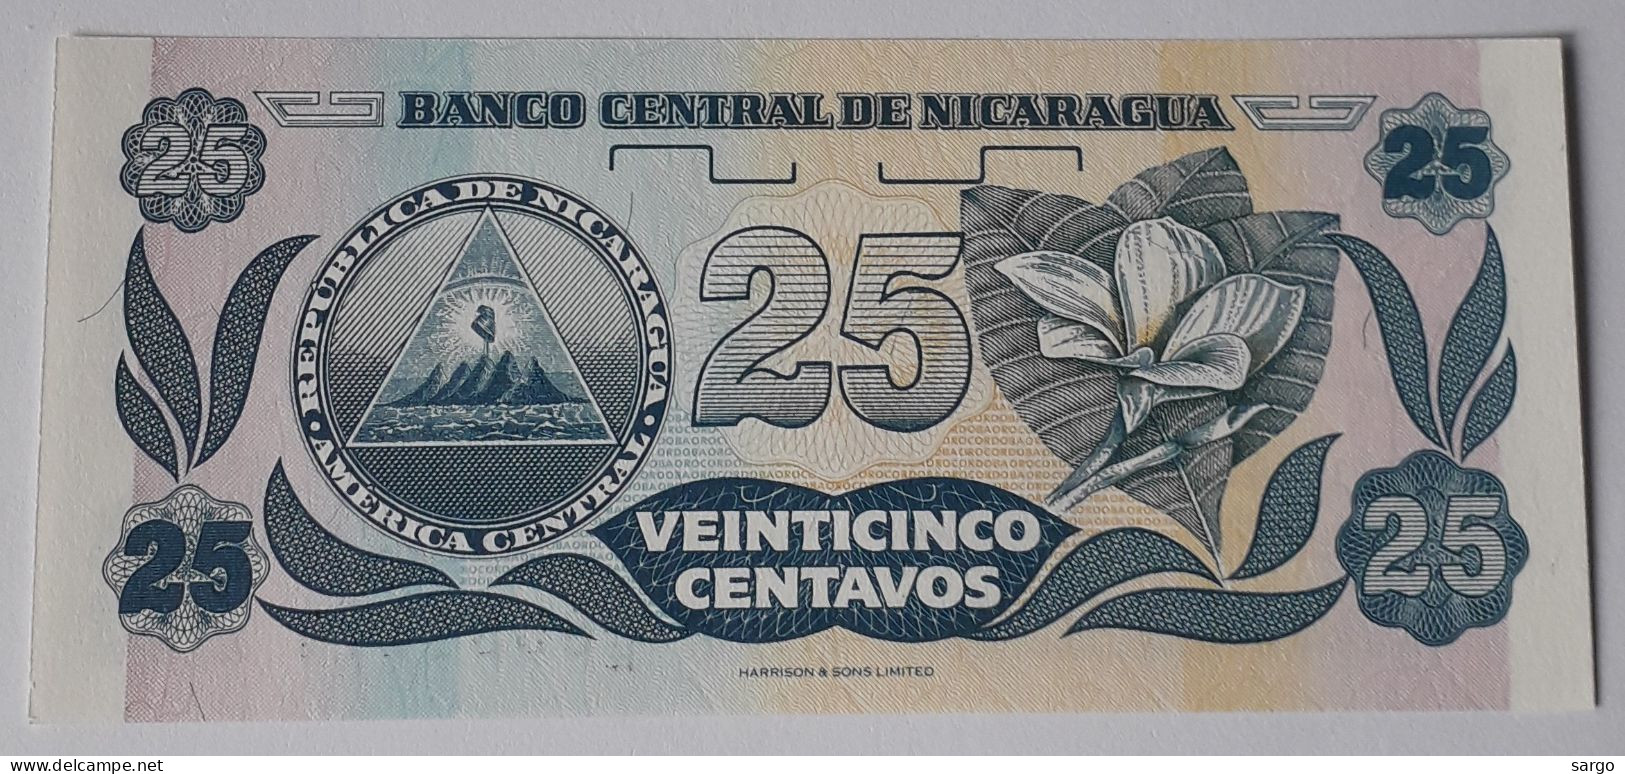 NICARAGUA -  25 CENTAVOS - P 170 (1991)  -  UNC - BANKNOTES - PAPER MONEY - CARTAMONETA - - Nicaragua